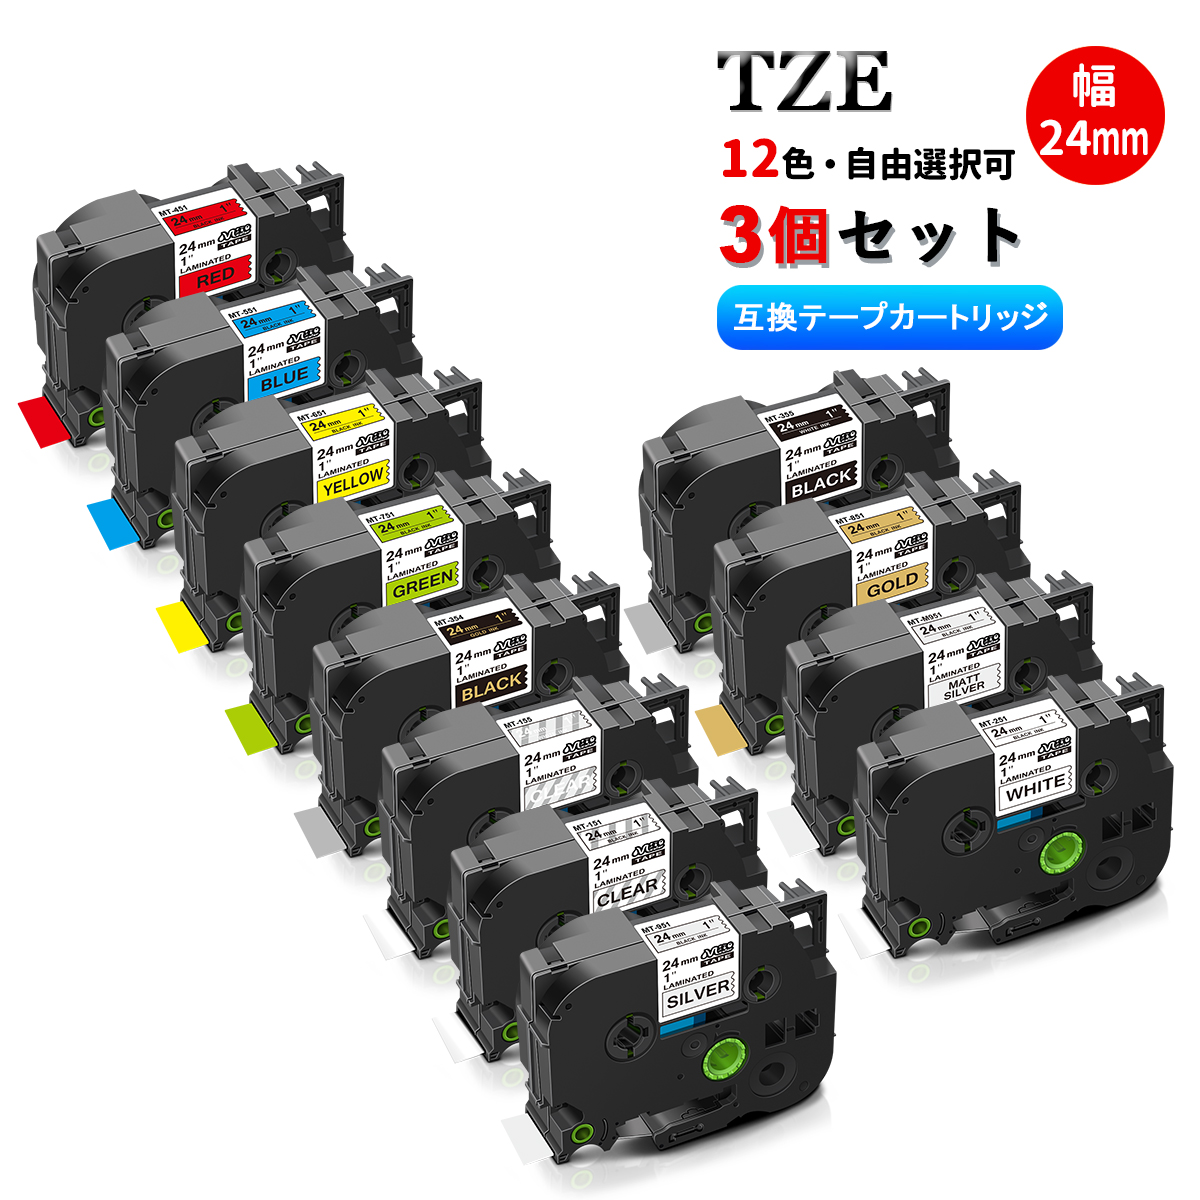 Tzeテープ 12mm幅X8m巻 34色選択 互換品 3個 P-Touch用